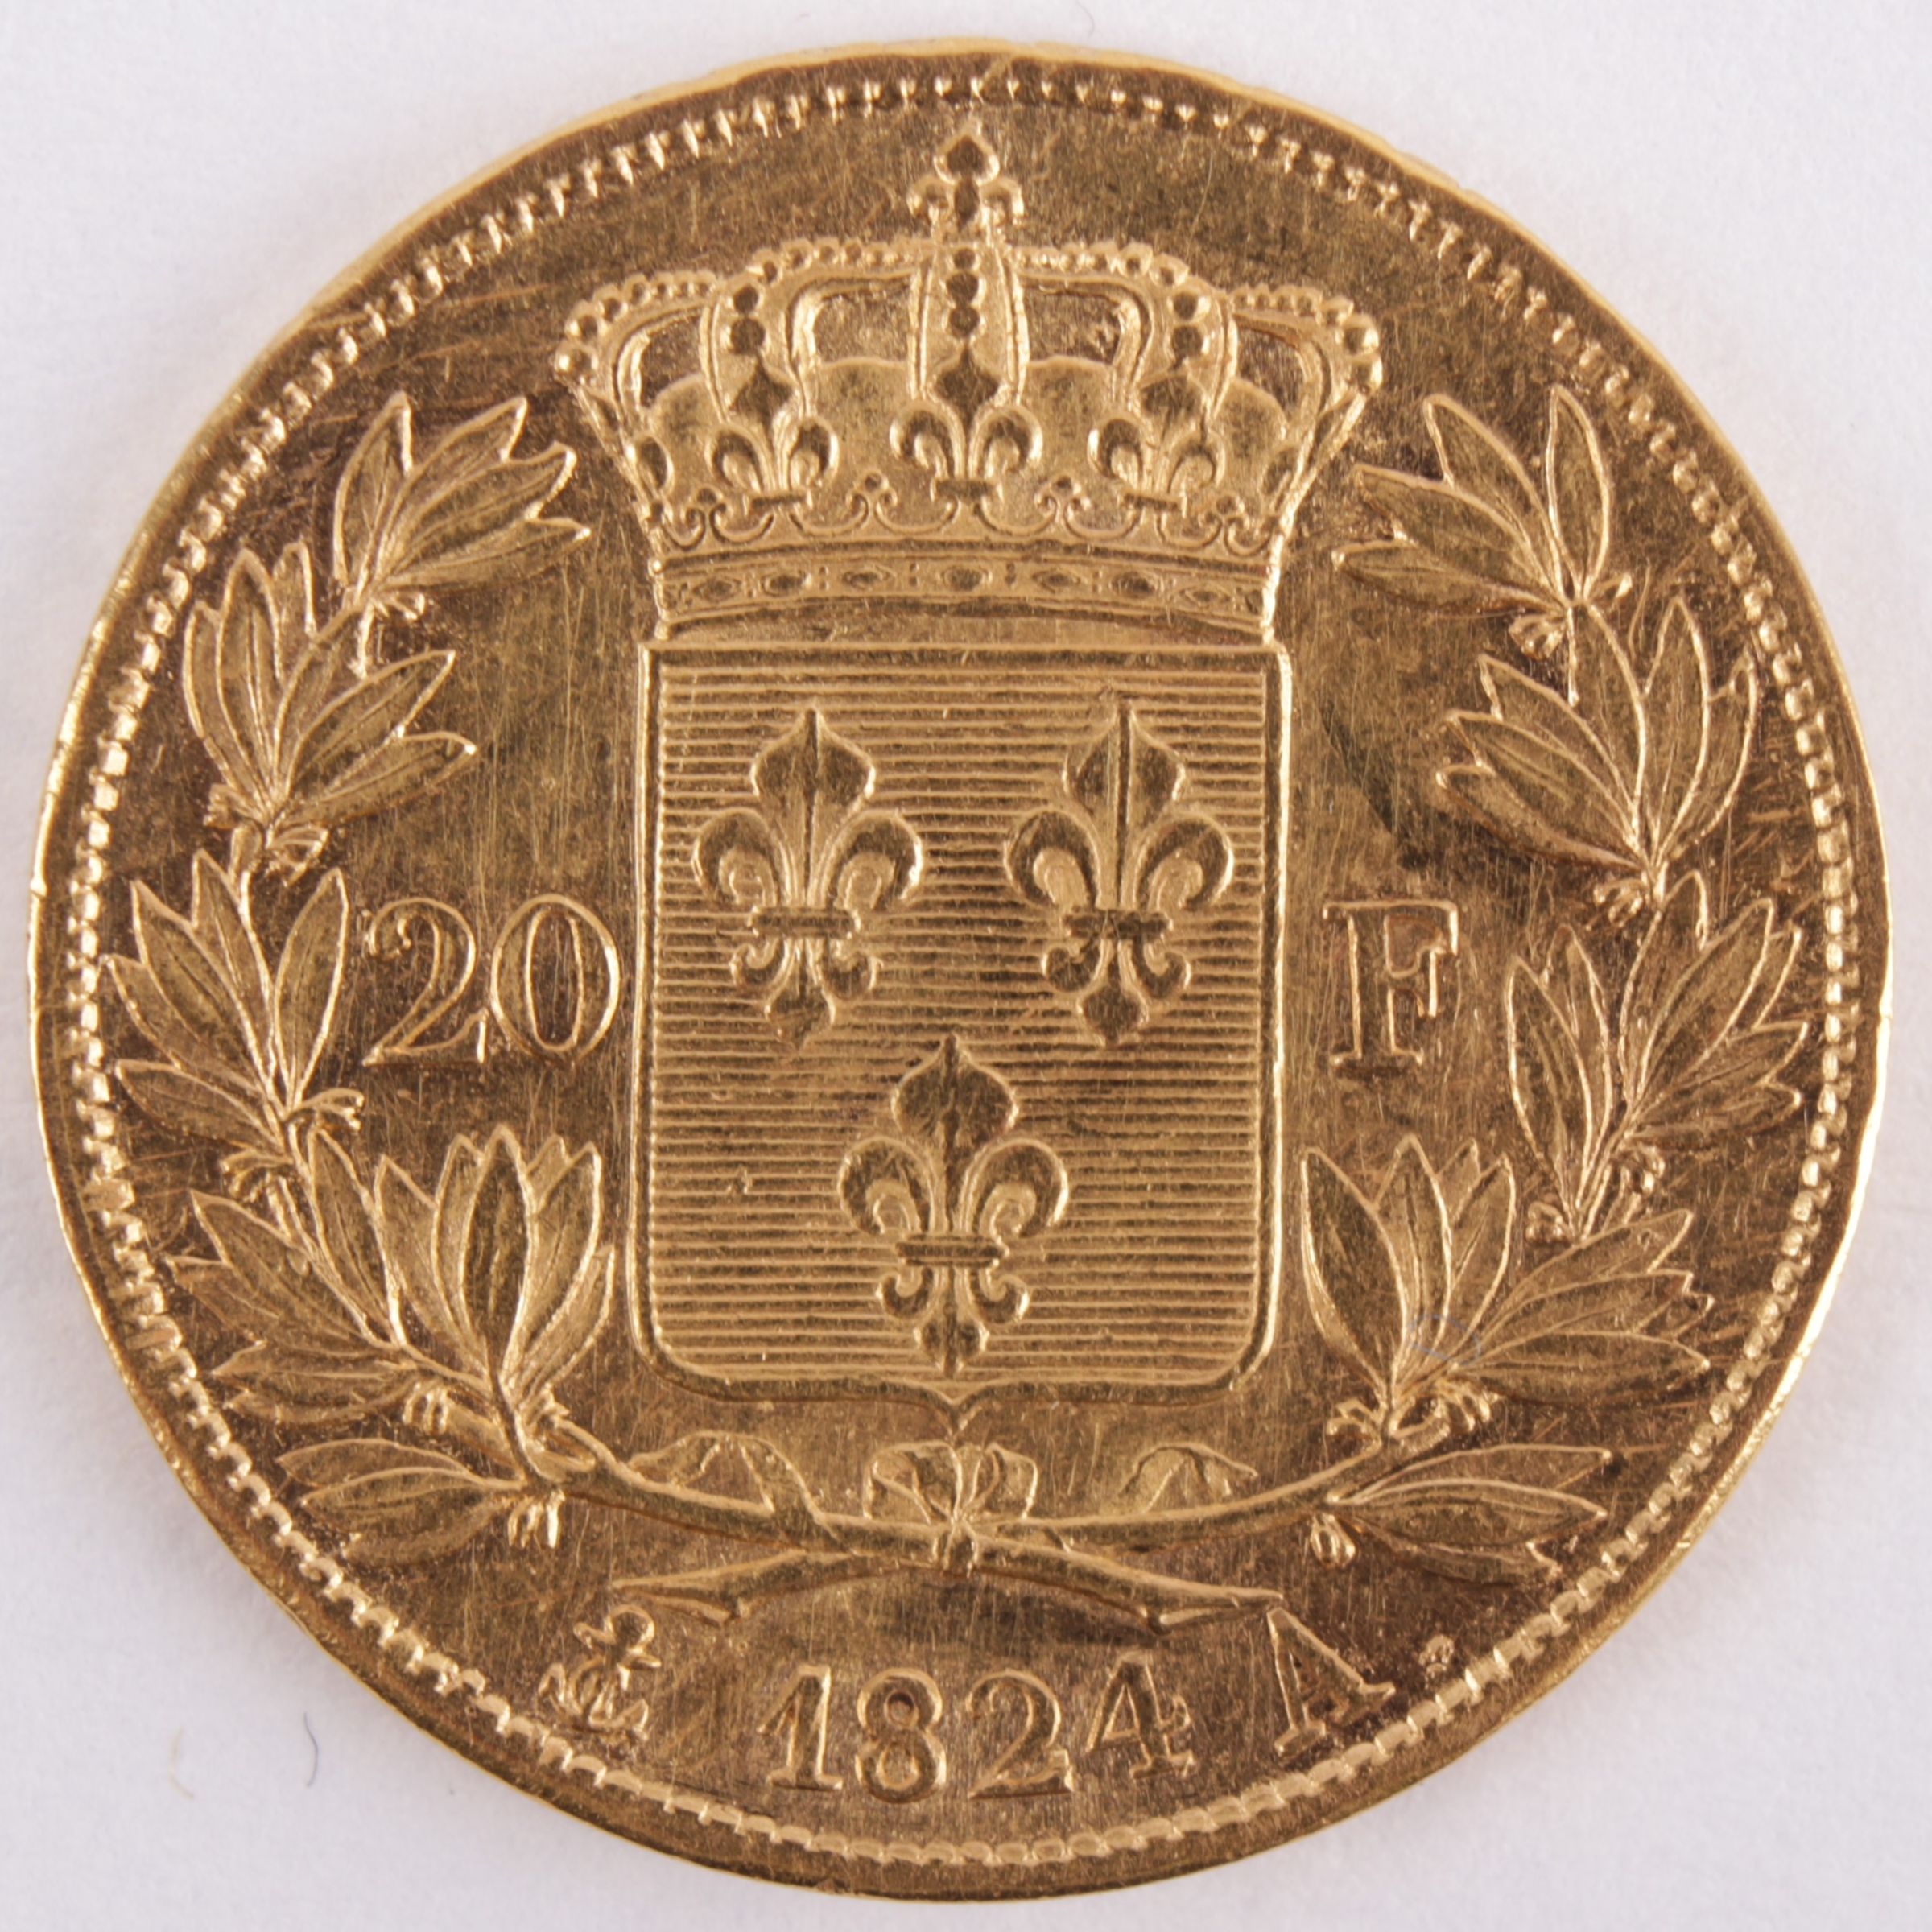 French 20. Louis 18 roi de France Золотая монета 1818. 20 Франков 1814 Франция золото. 40 Francs 1834. 40 Франков золото.